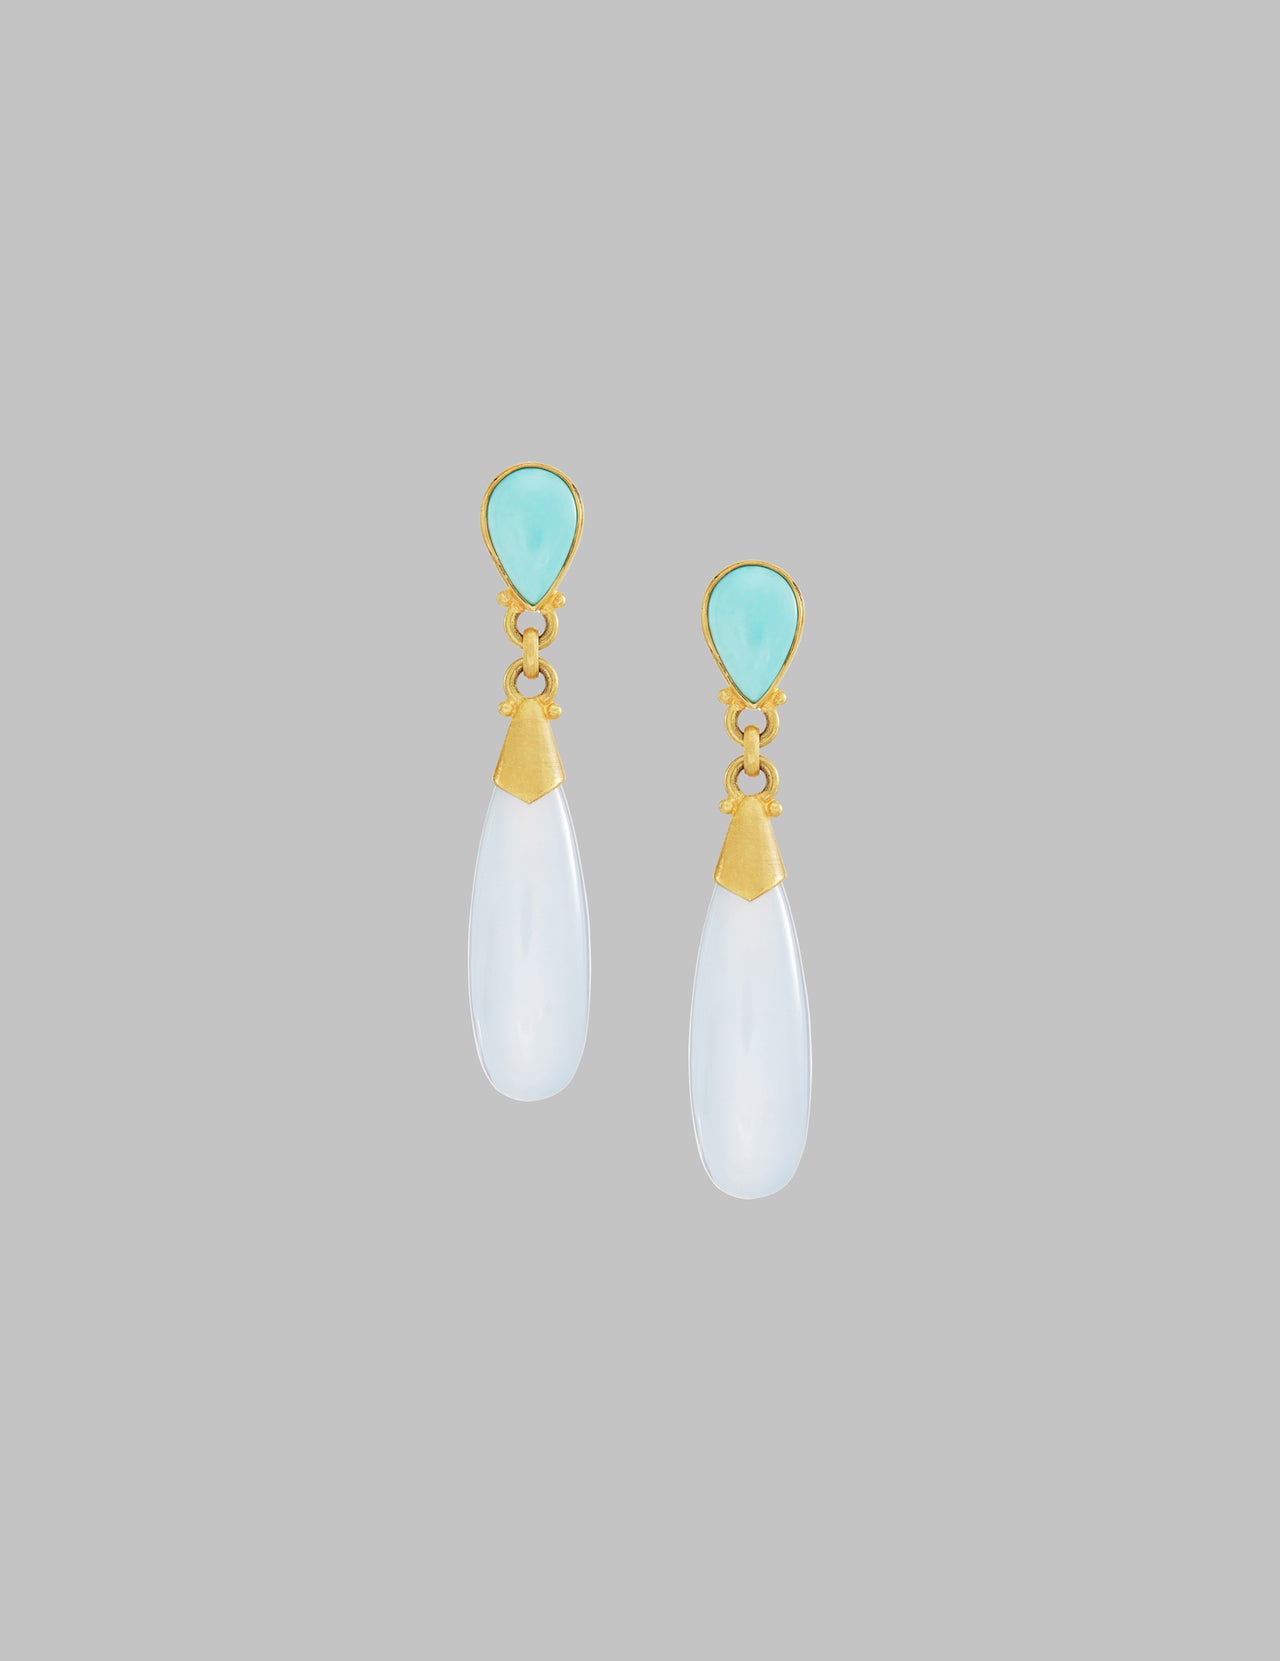  18k Gold Turquoise & Chalcedony Earrings | Varana 